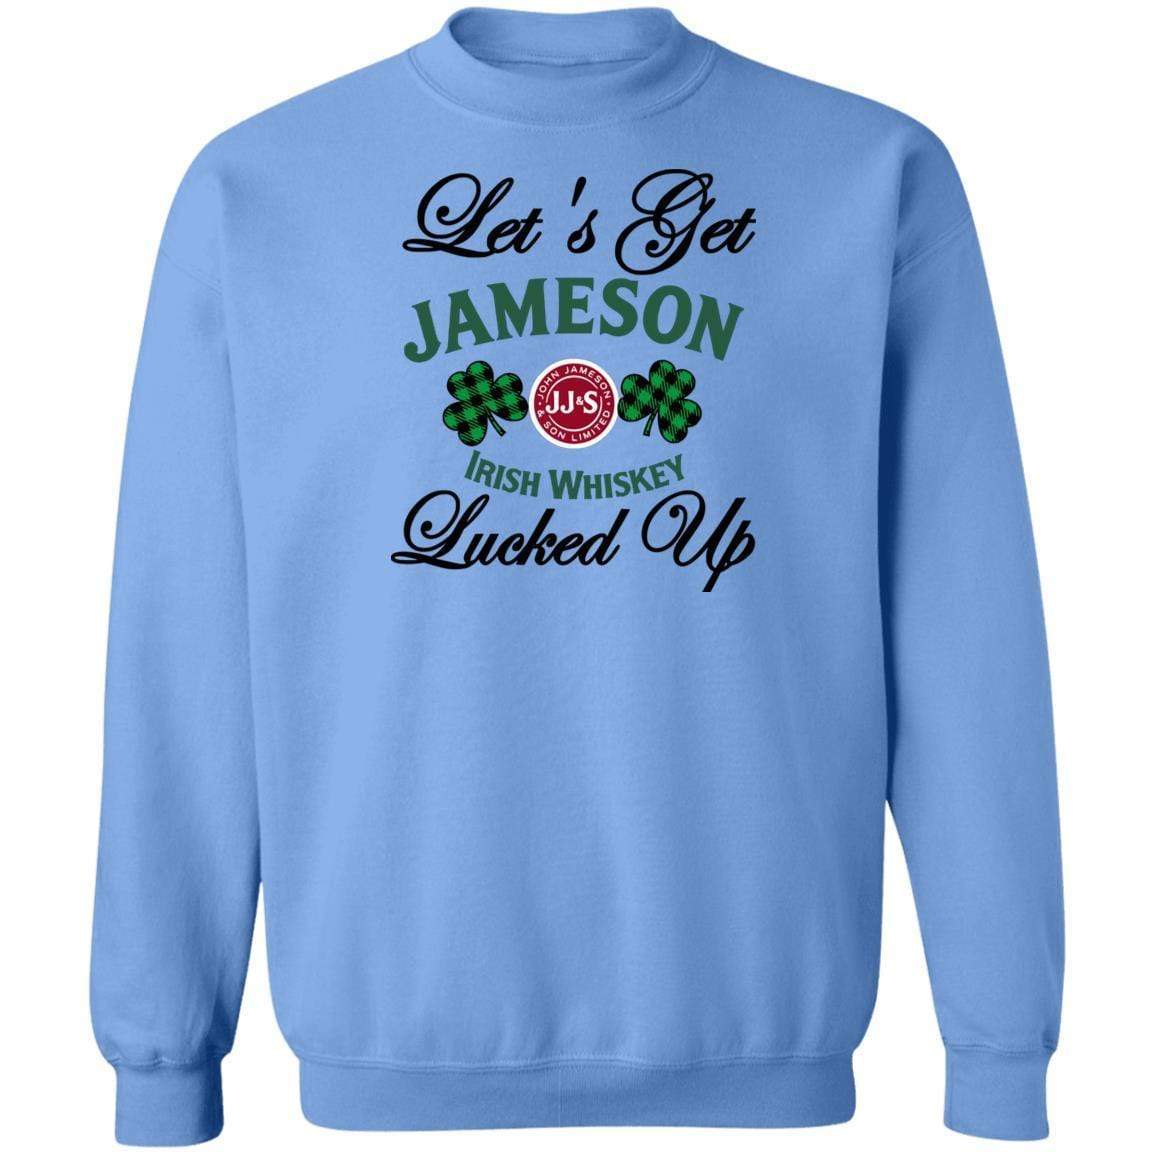 Sweatshirts Carolina Blue / S Winey Bitches Co "Let's Get Lucked Up" Jameson Crewneck Pullover Sweatshirt  8 oz. WineyBitchesCo